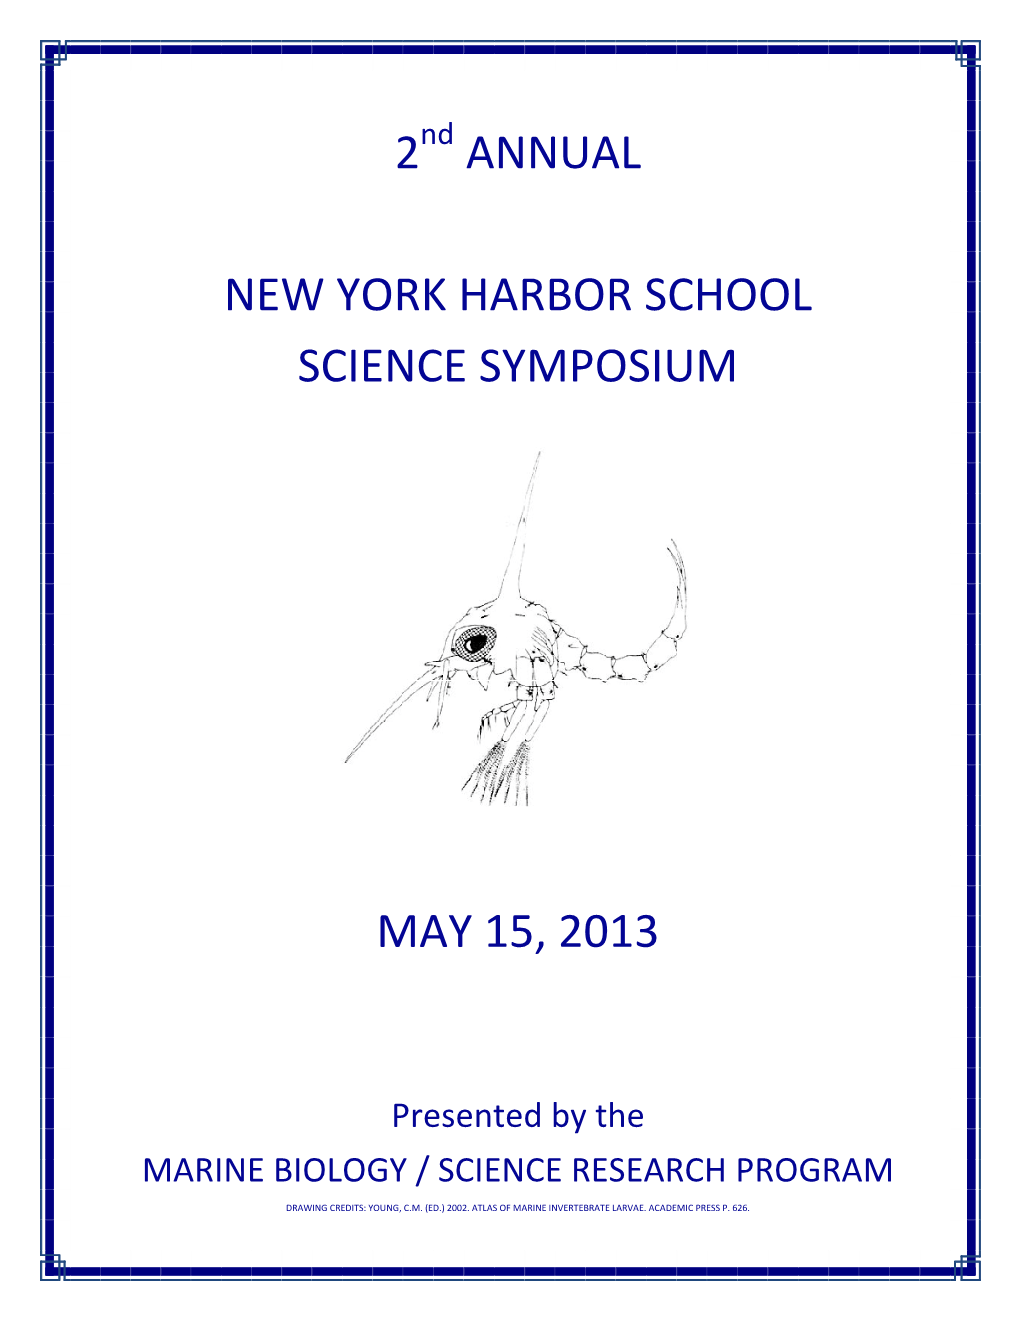 2 Annual New York Harbor School Science Symposium